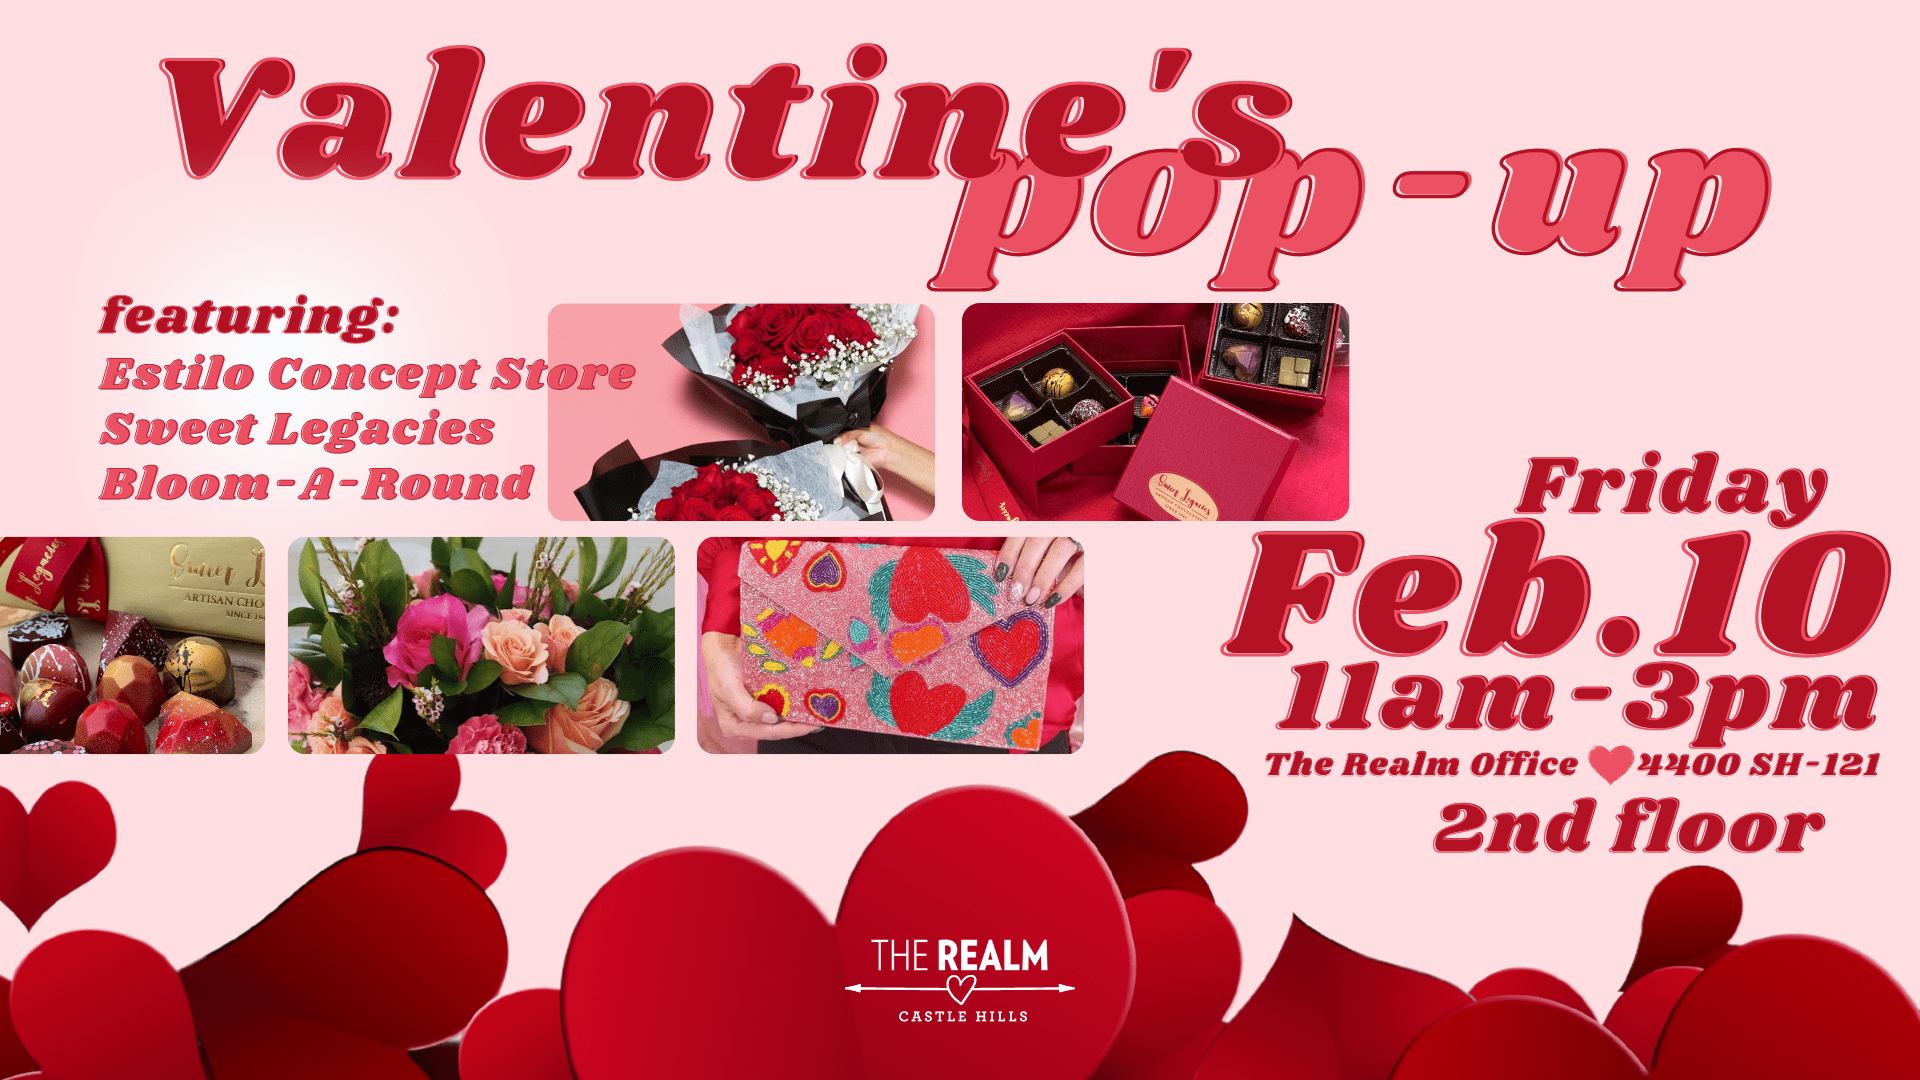 Feb10 valentines pop up (FB event)